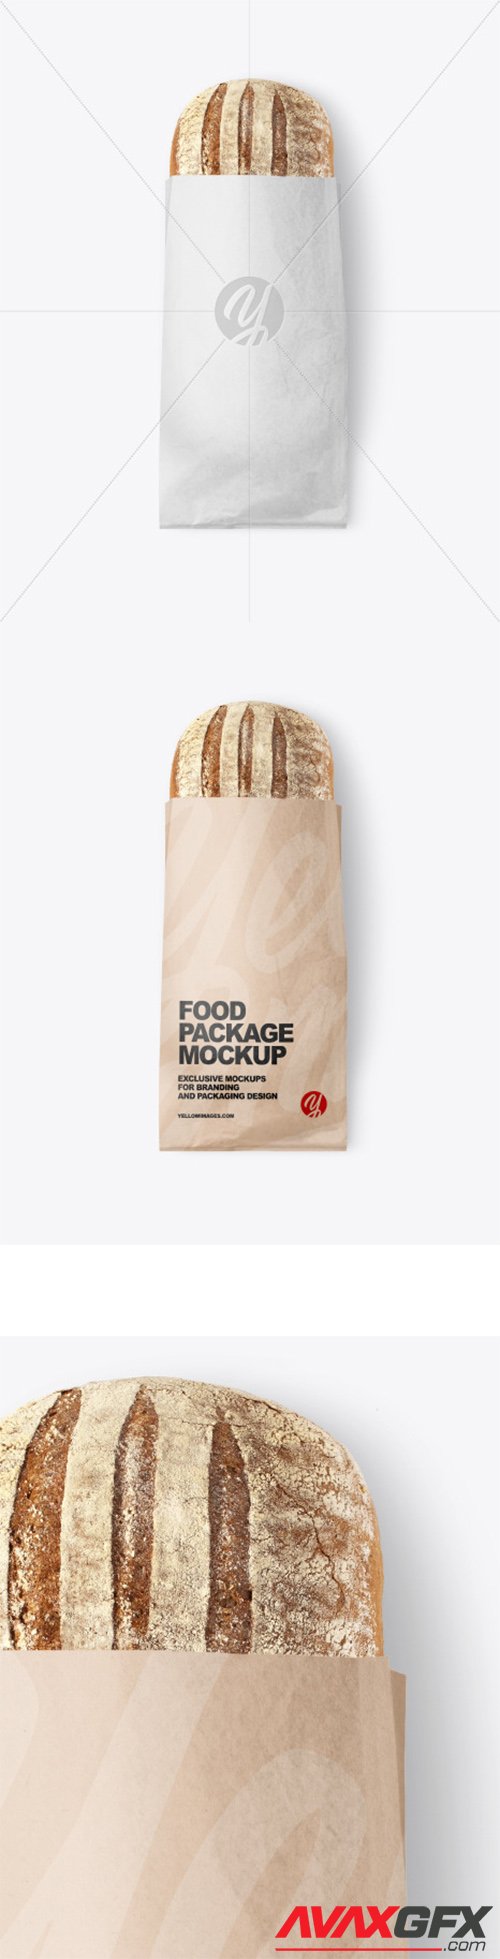 Kraft Package with Bread Mockup 82079